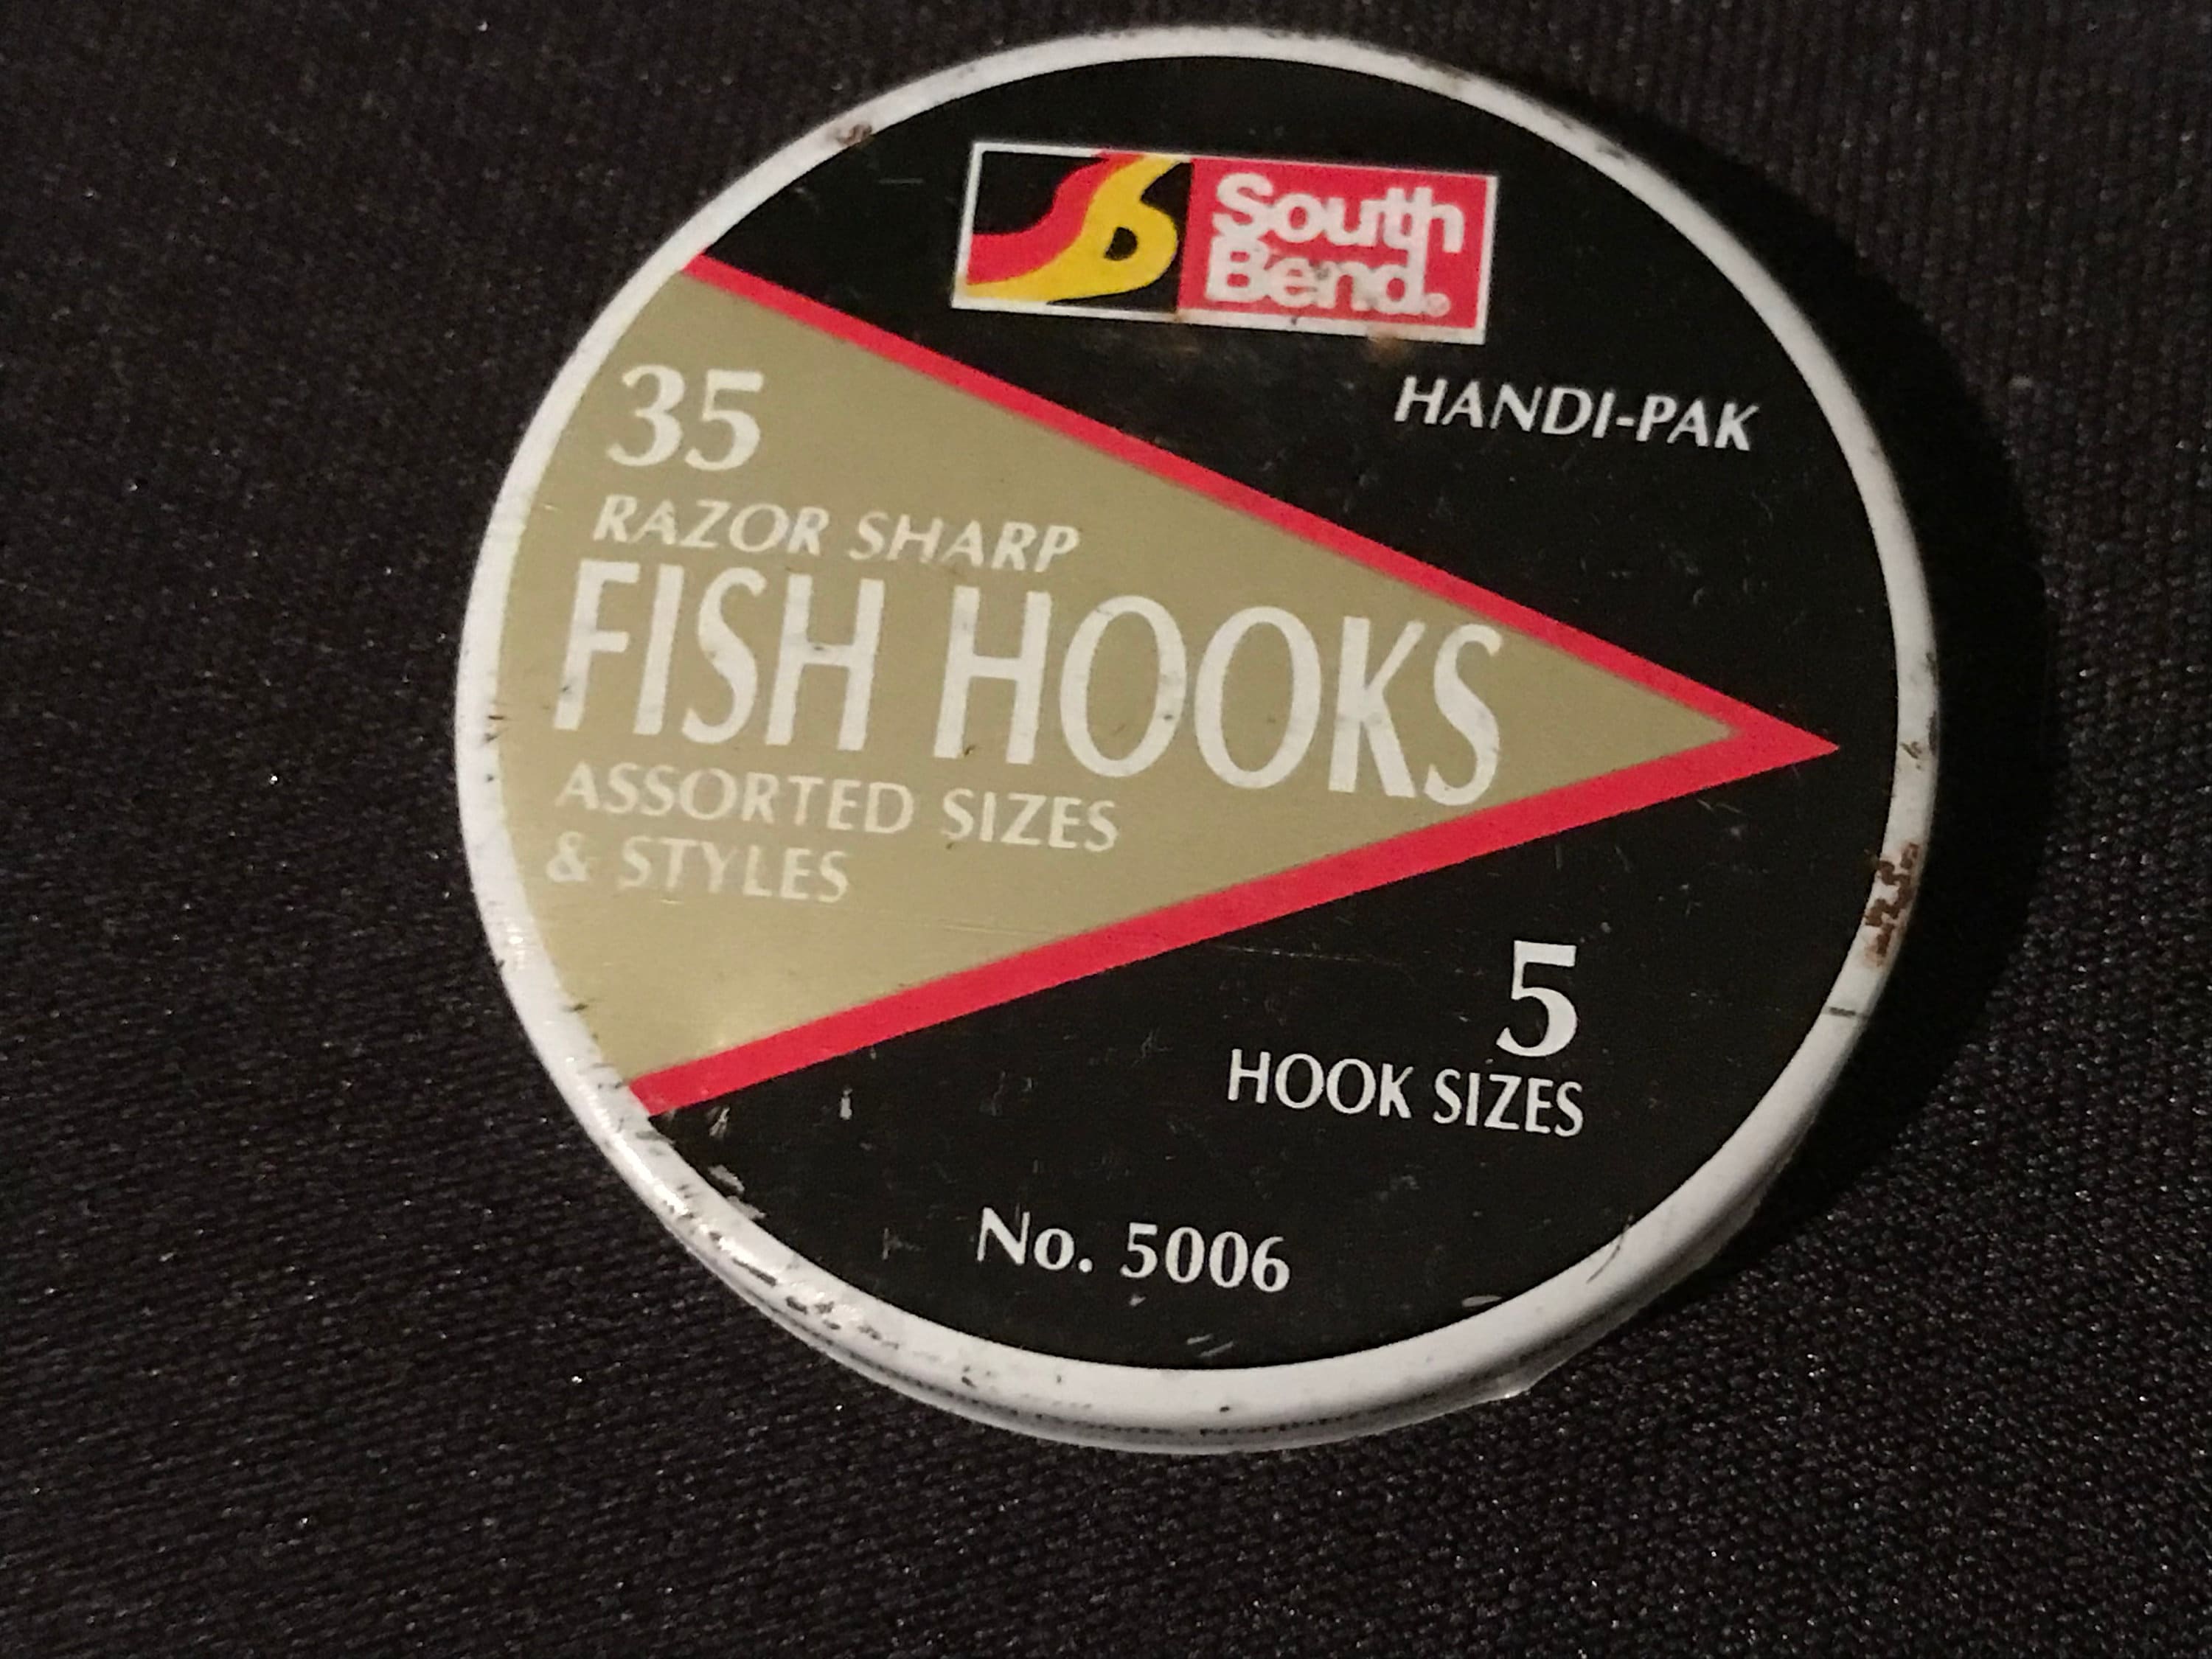 Vintage South Bend Handi-pak Fish Hooks Tin Hooks 1950's From